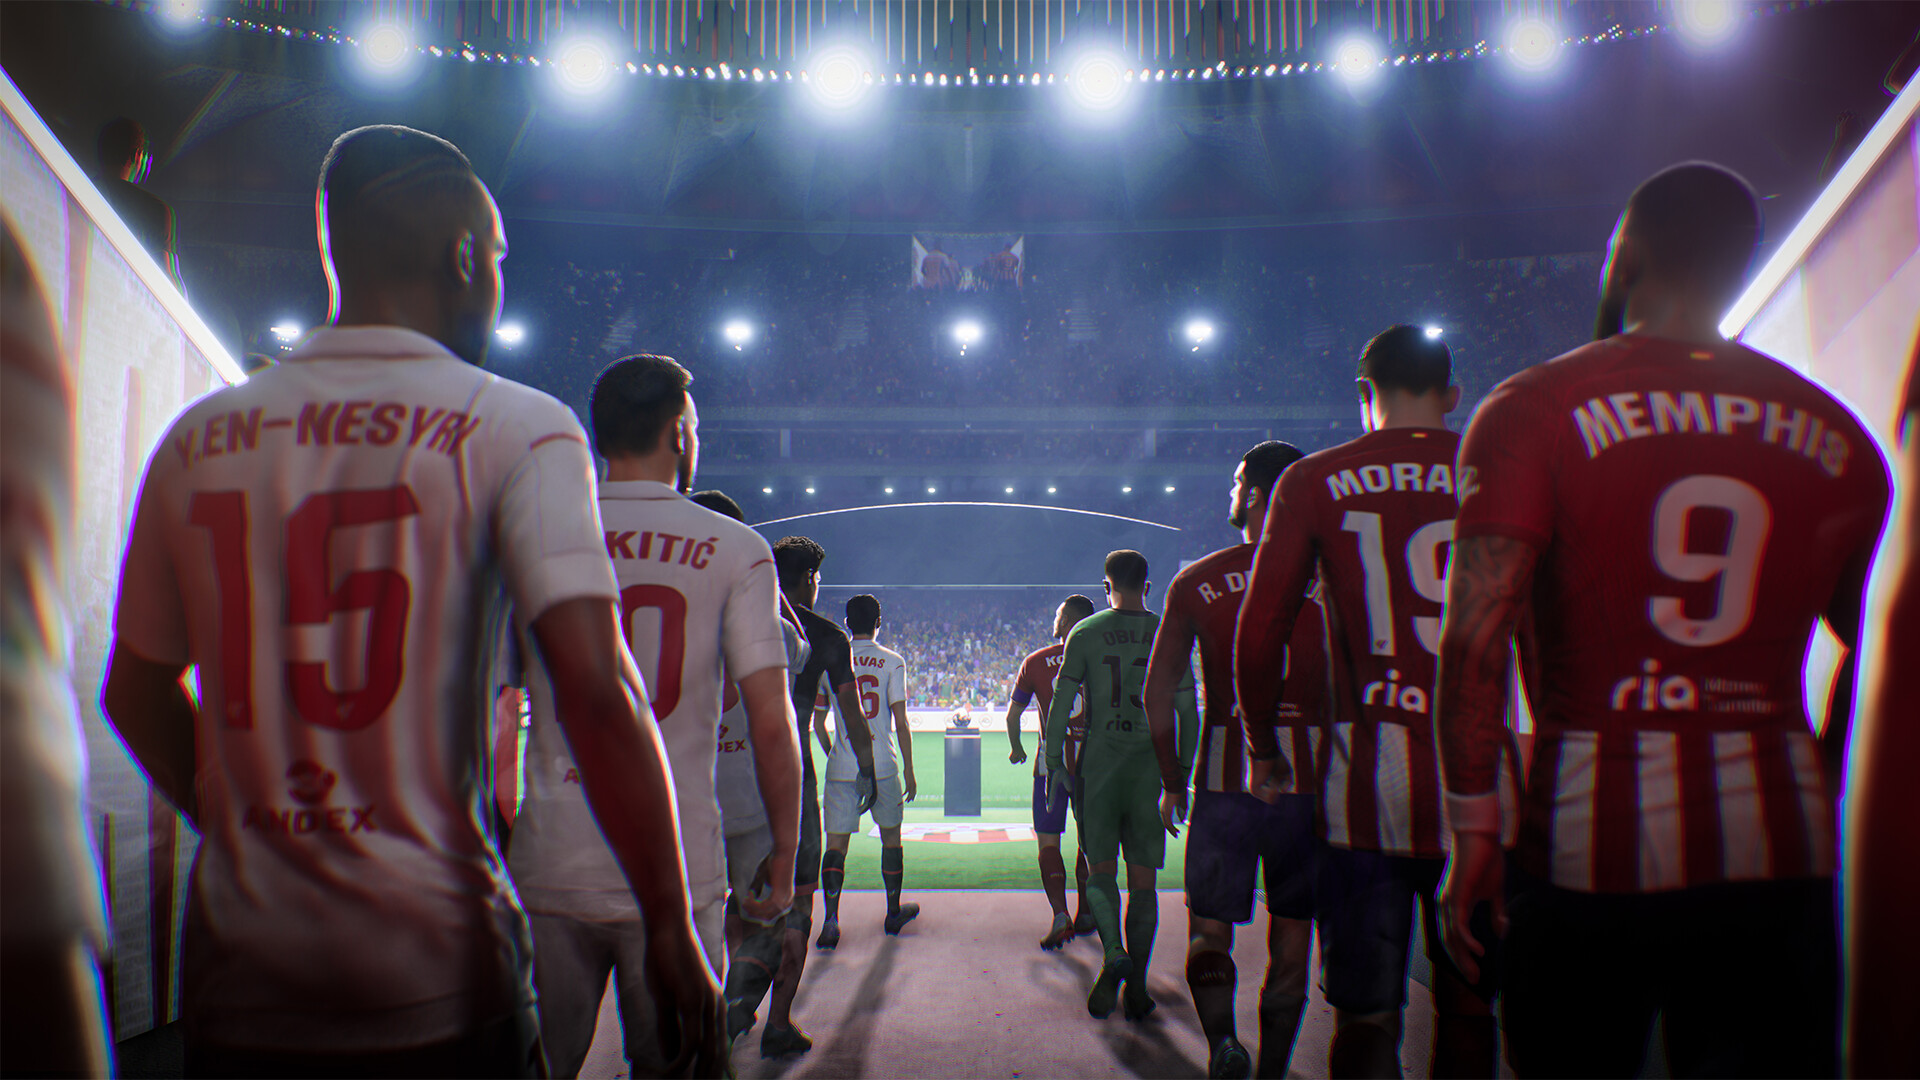 Jogo FIFA 23 - Xbox One - Electronic Arts - Jogos Xbox One - Magazine Luiza